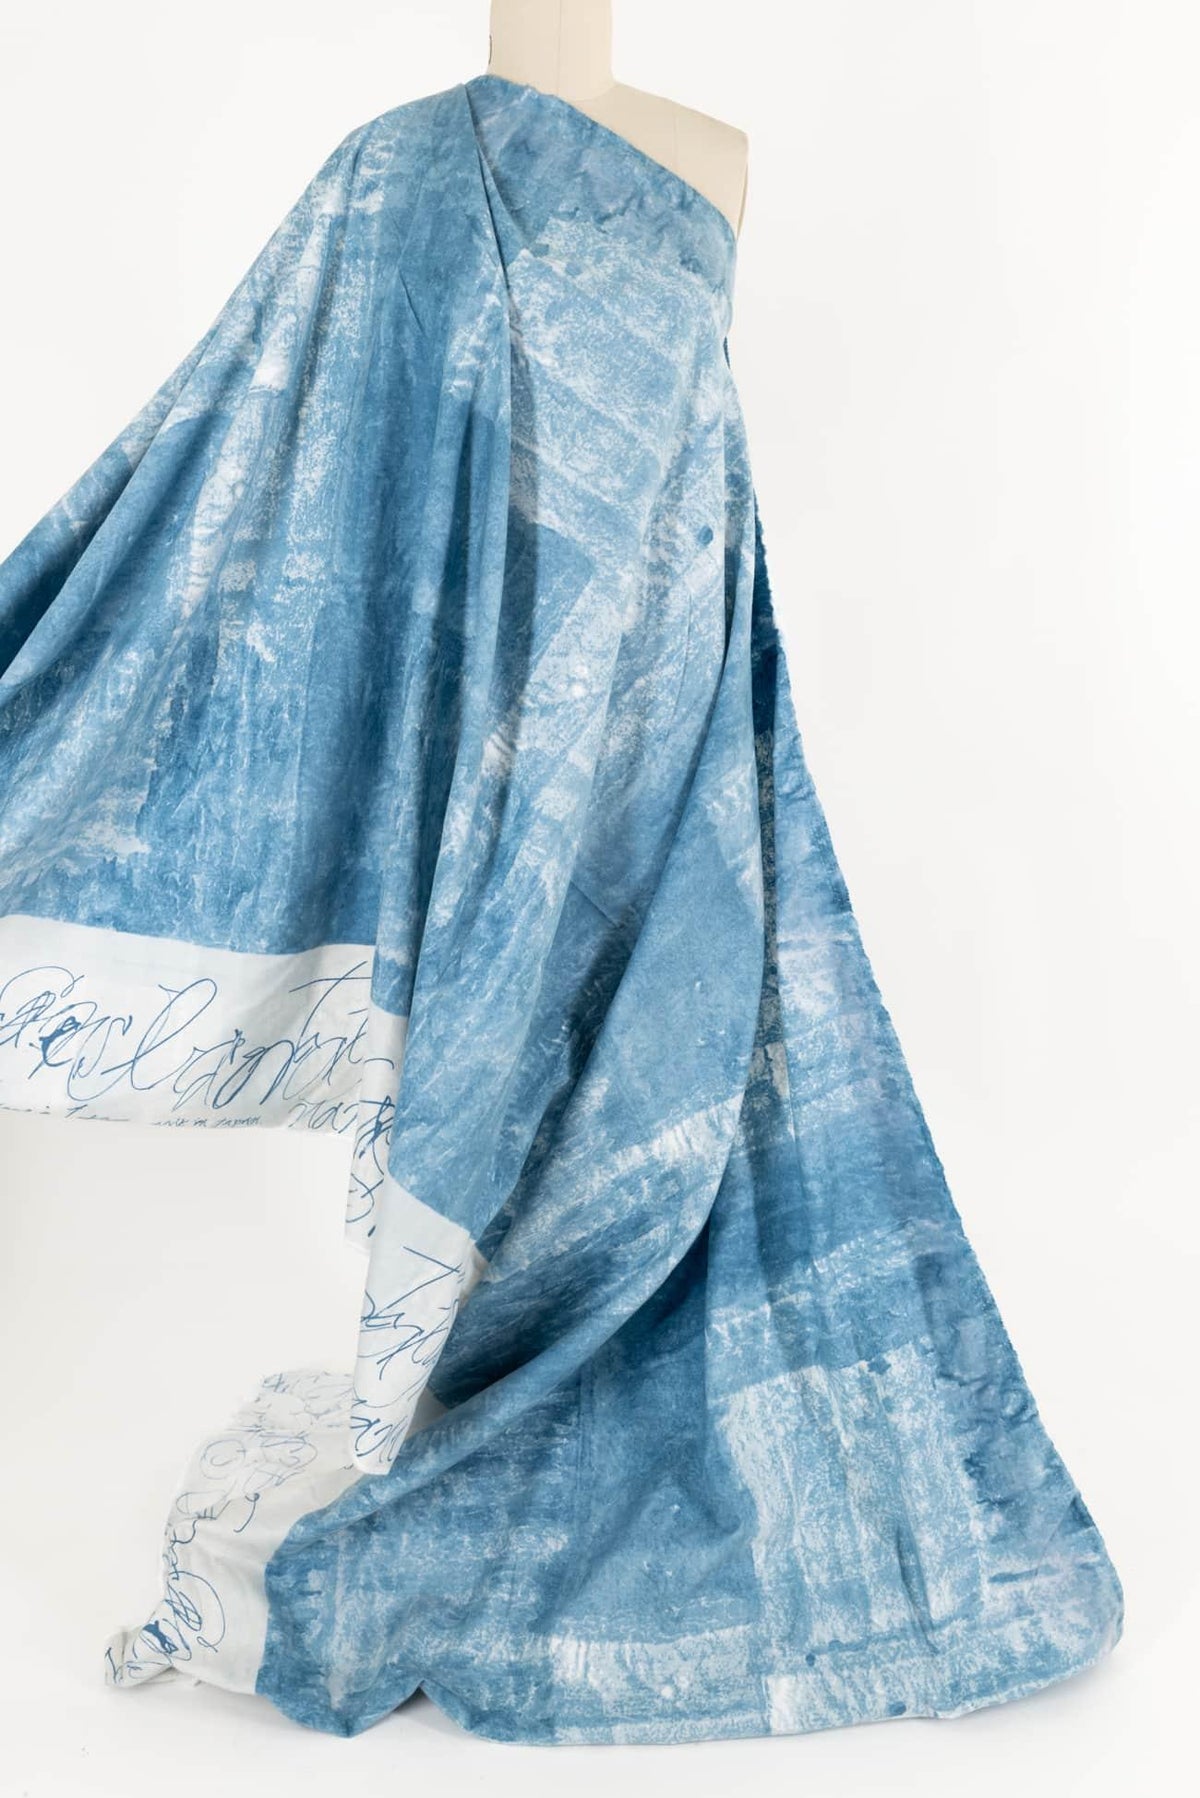 Blue Wabi Sabi Japanese Brushed Linen/Cotton Woven - Marcy Tilton Fabrics